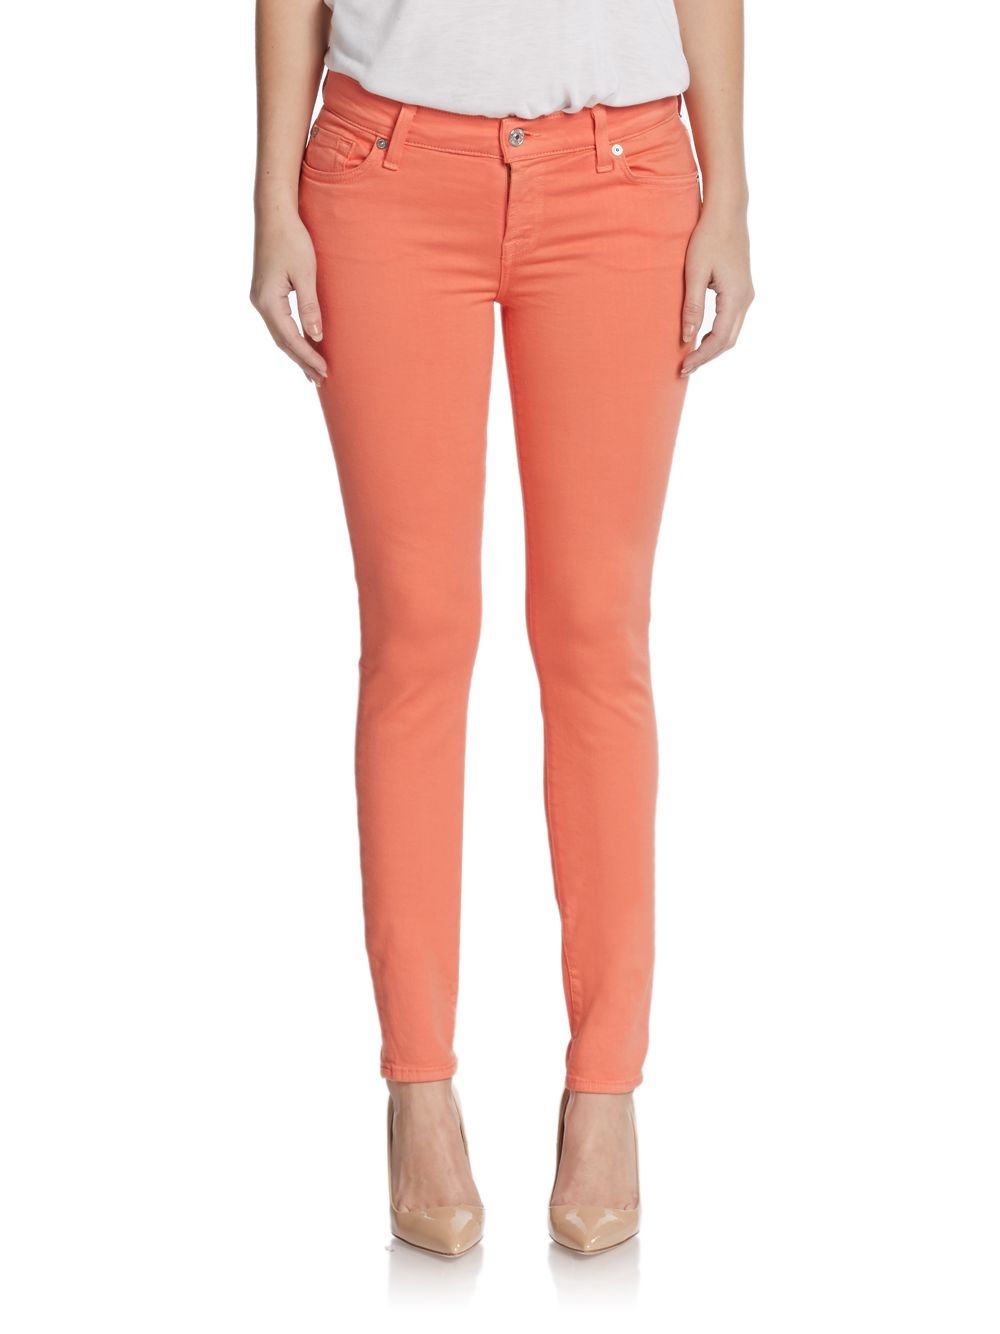 7 For All Mankind Skinny Jeans Tangerine Orange Zipper Denim